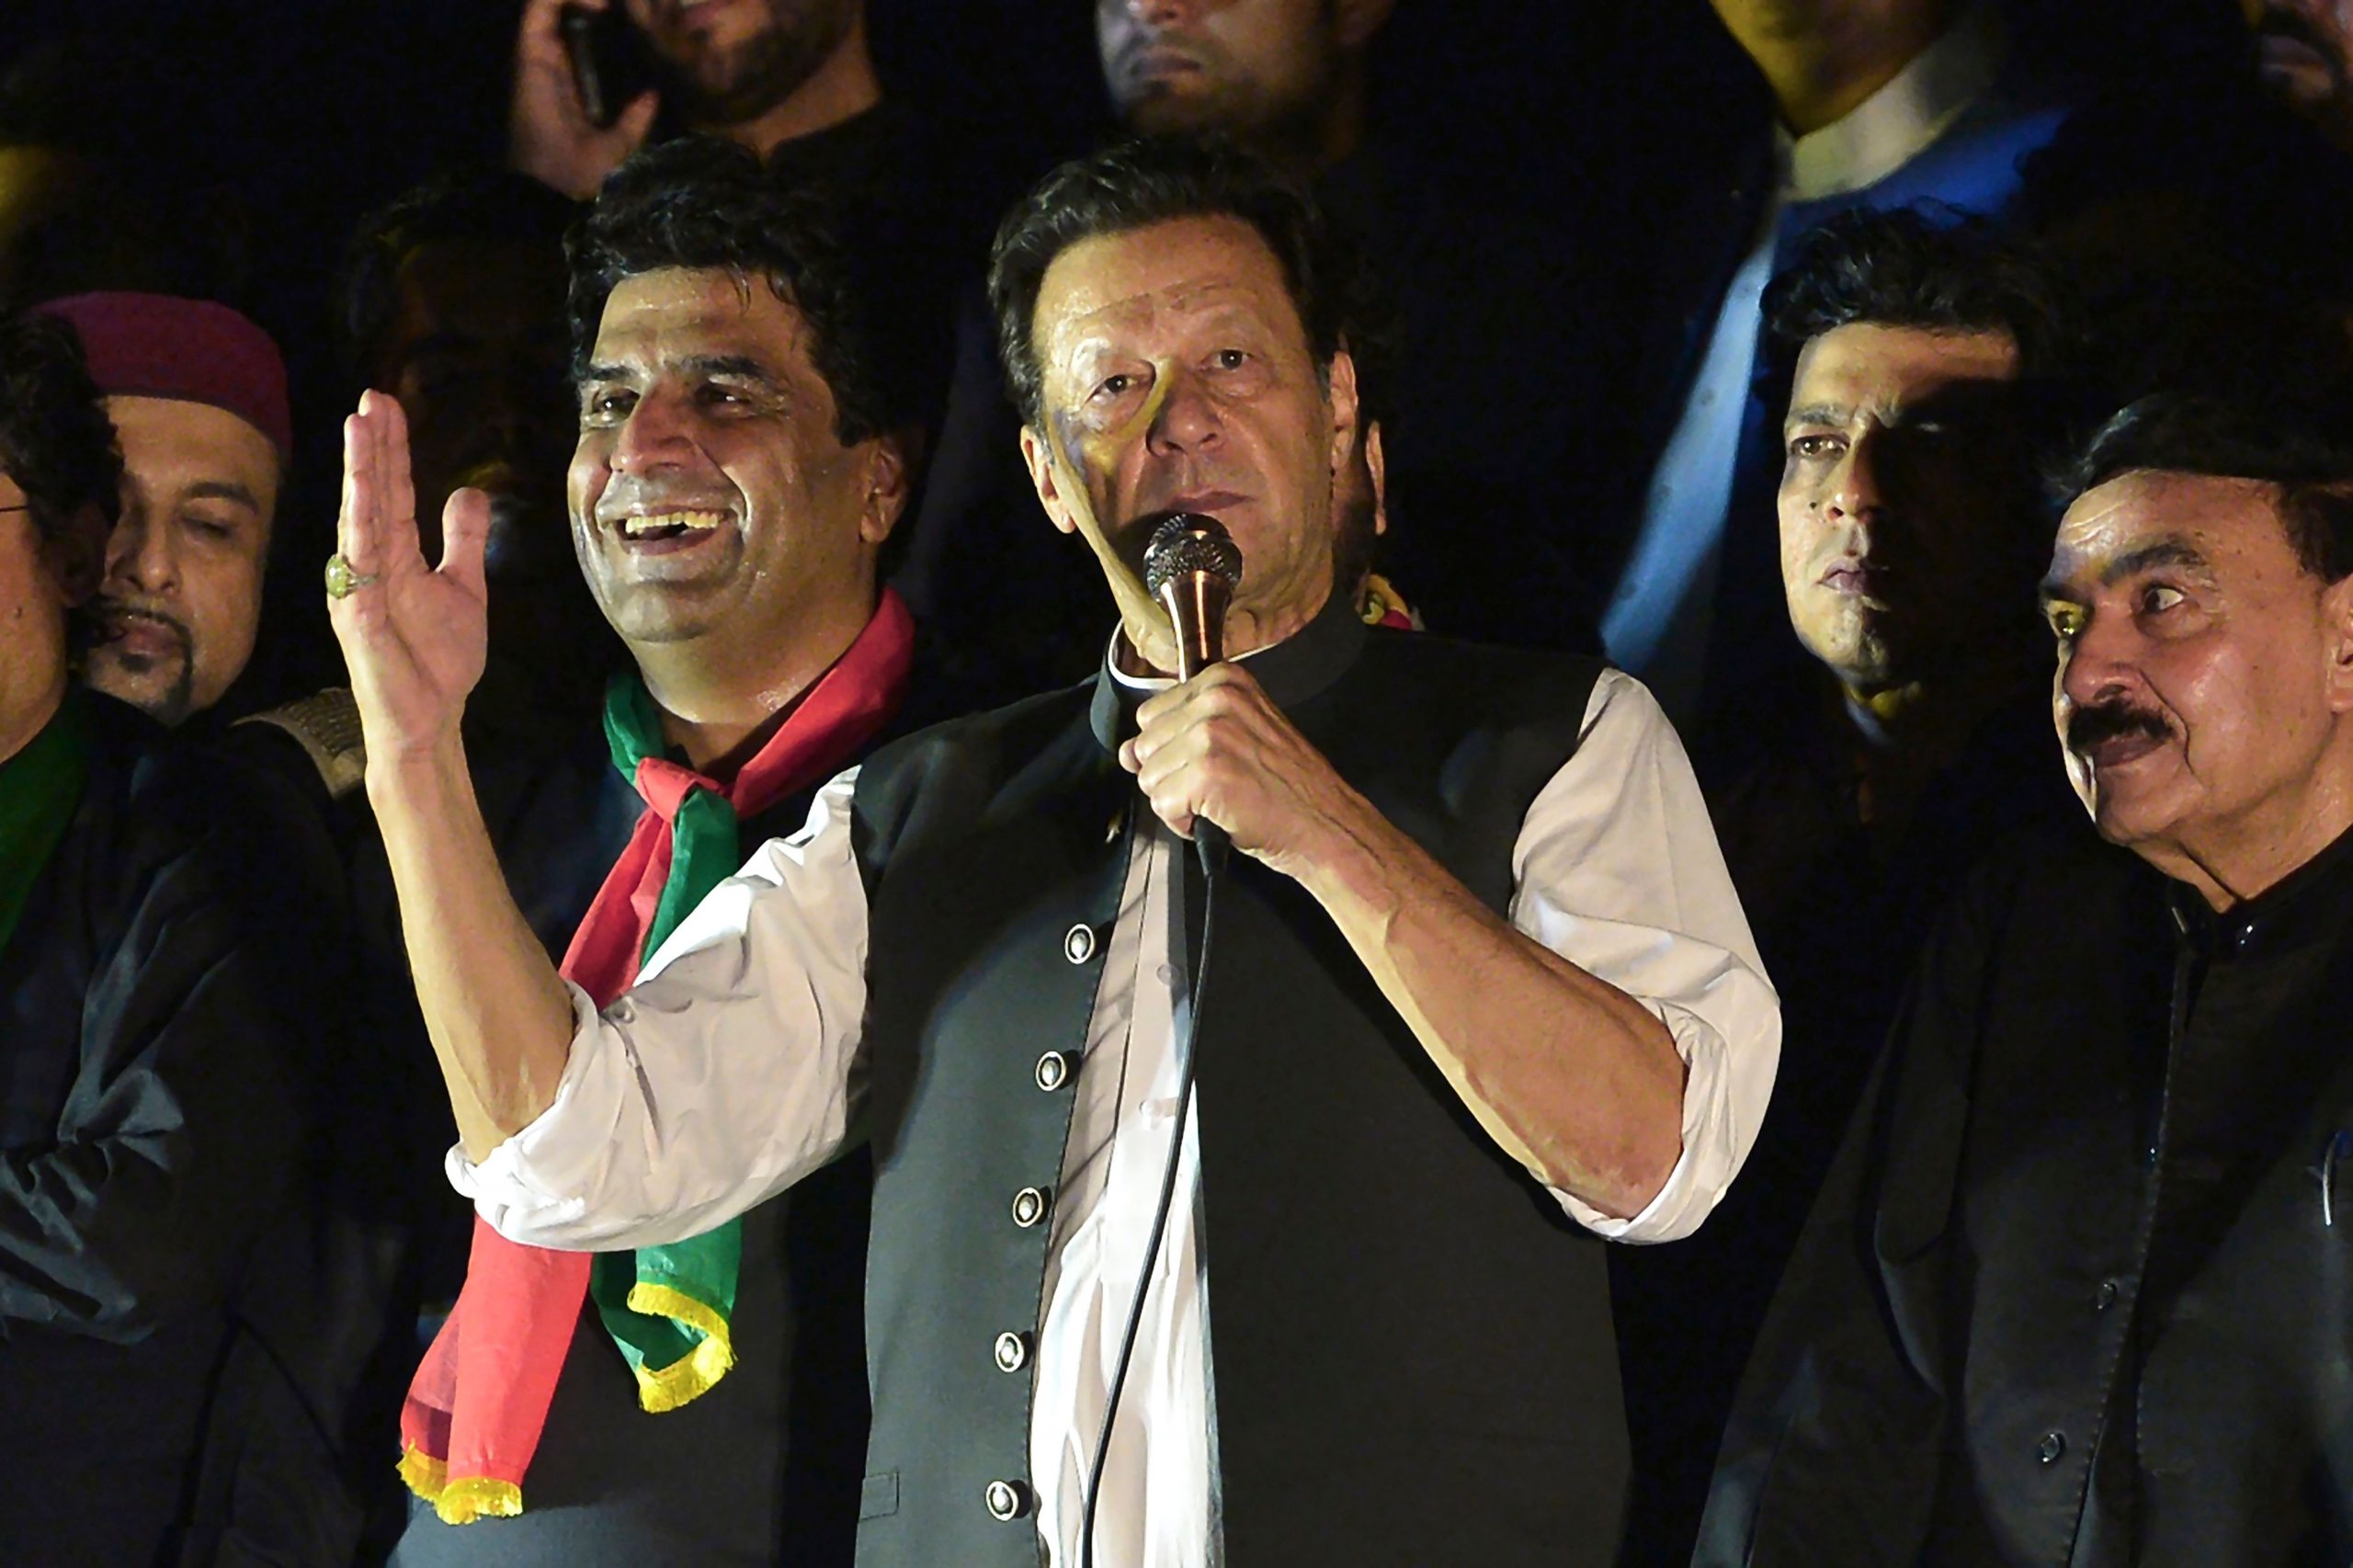 Why was Imran Khan marching in Wazirabad?